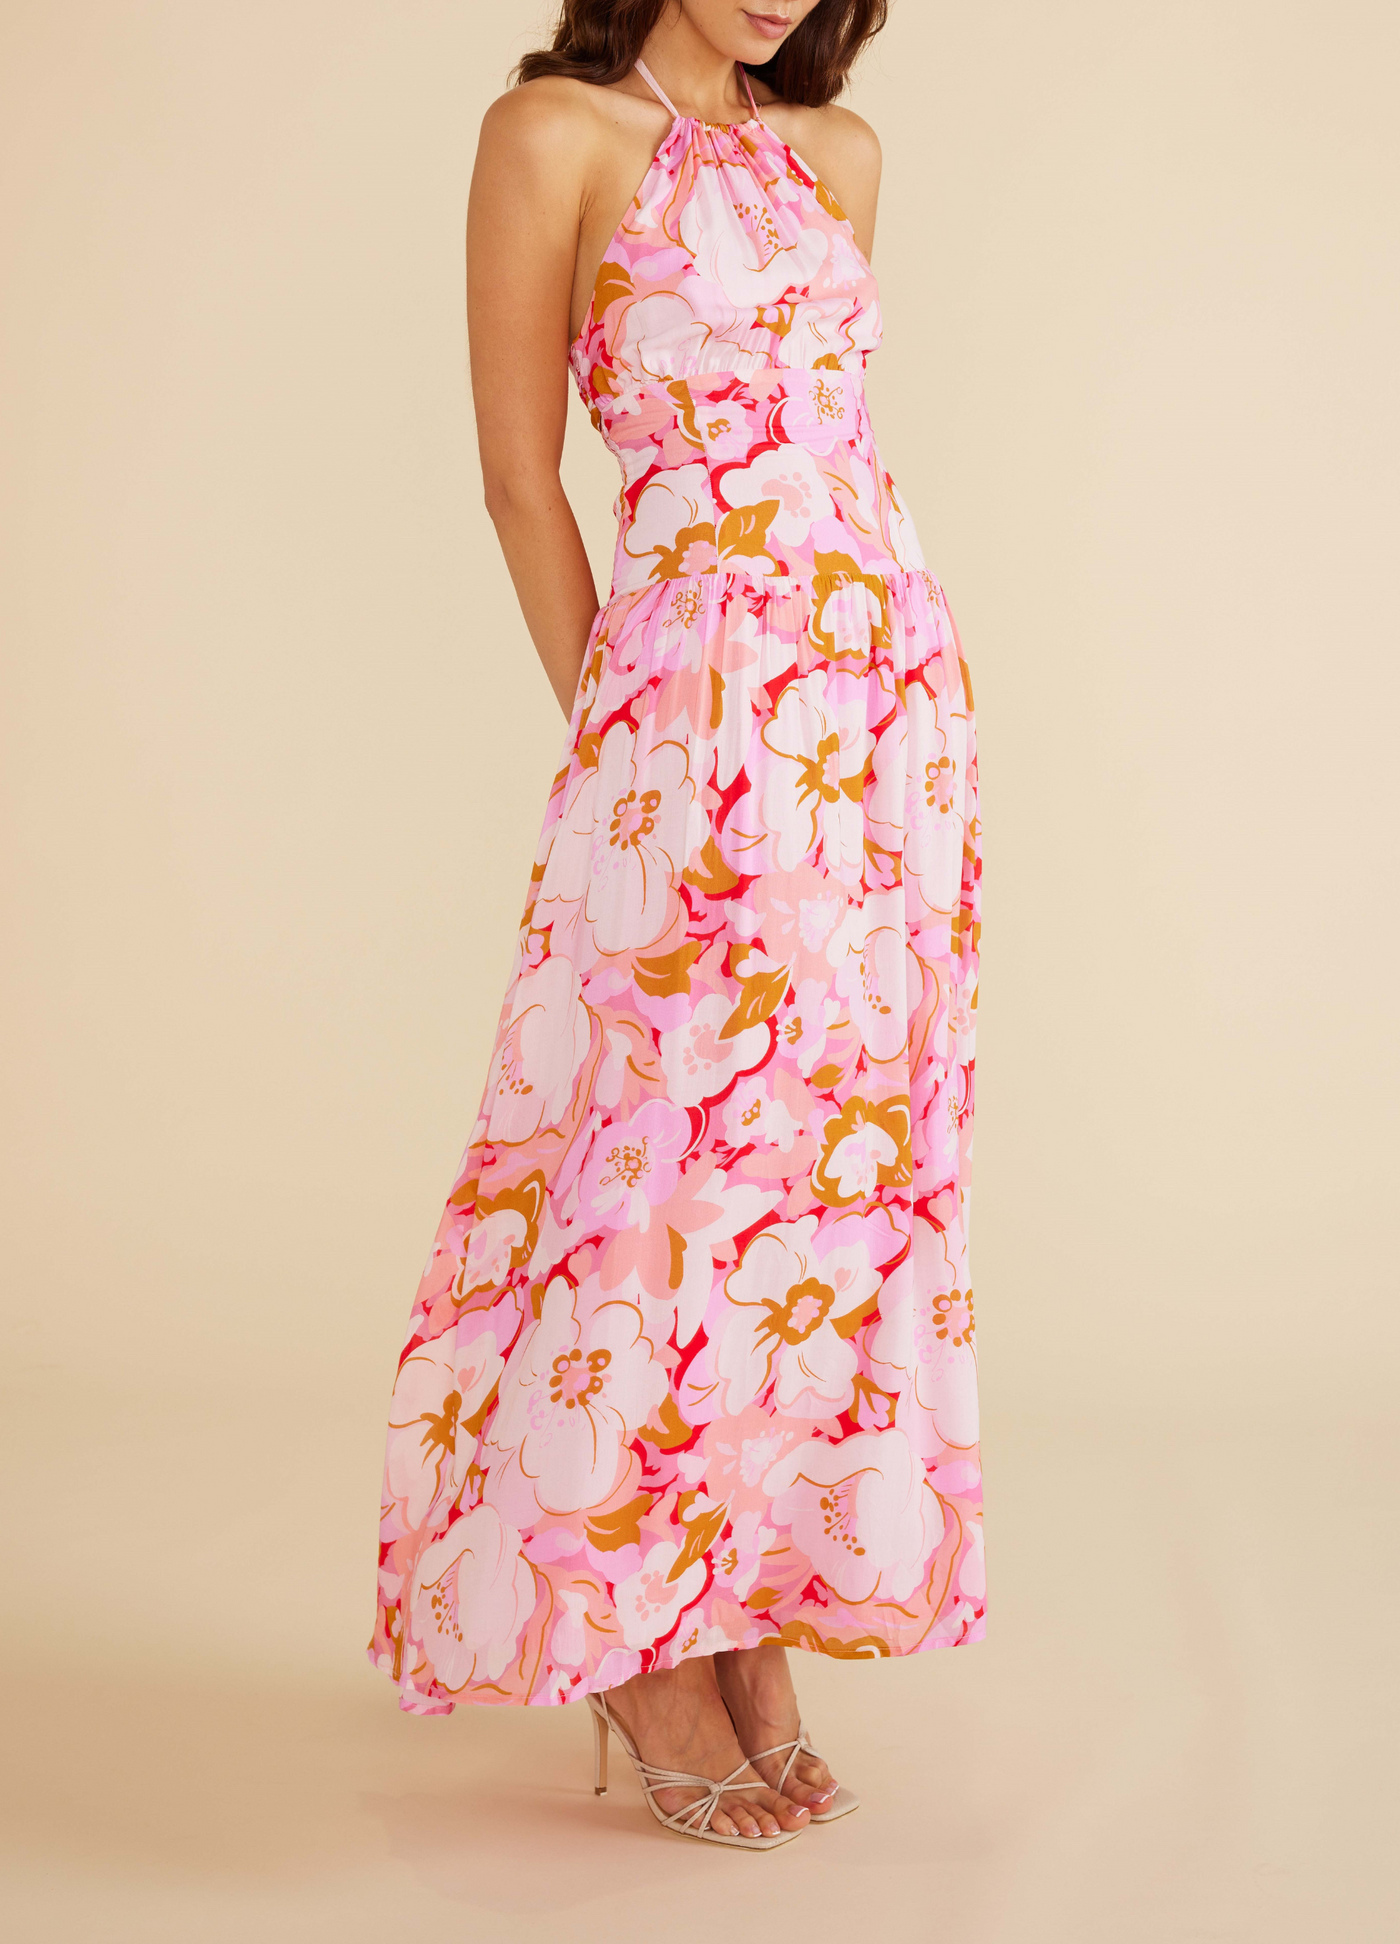 Model wearing the Amina Halterneck dress in floral print